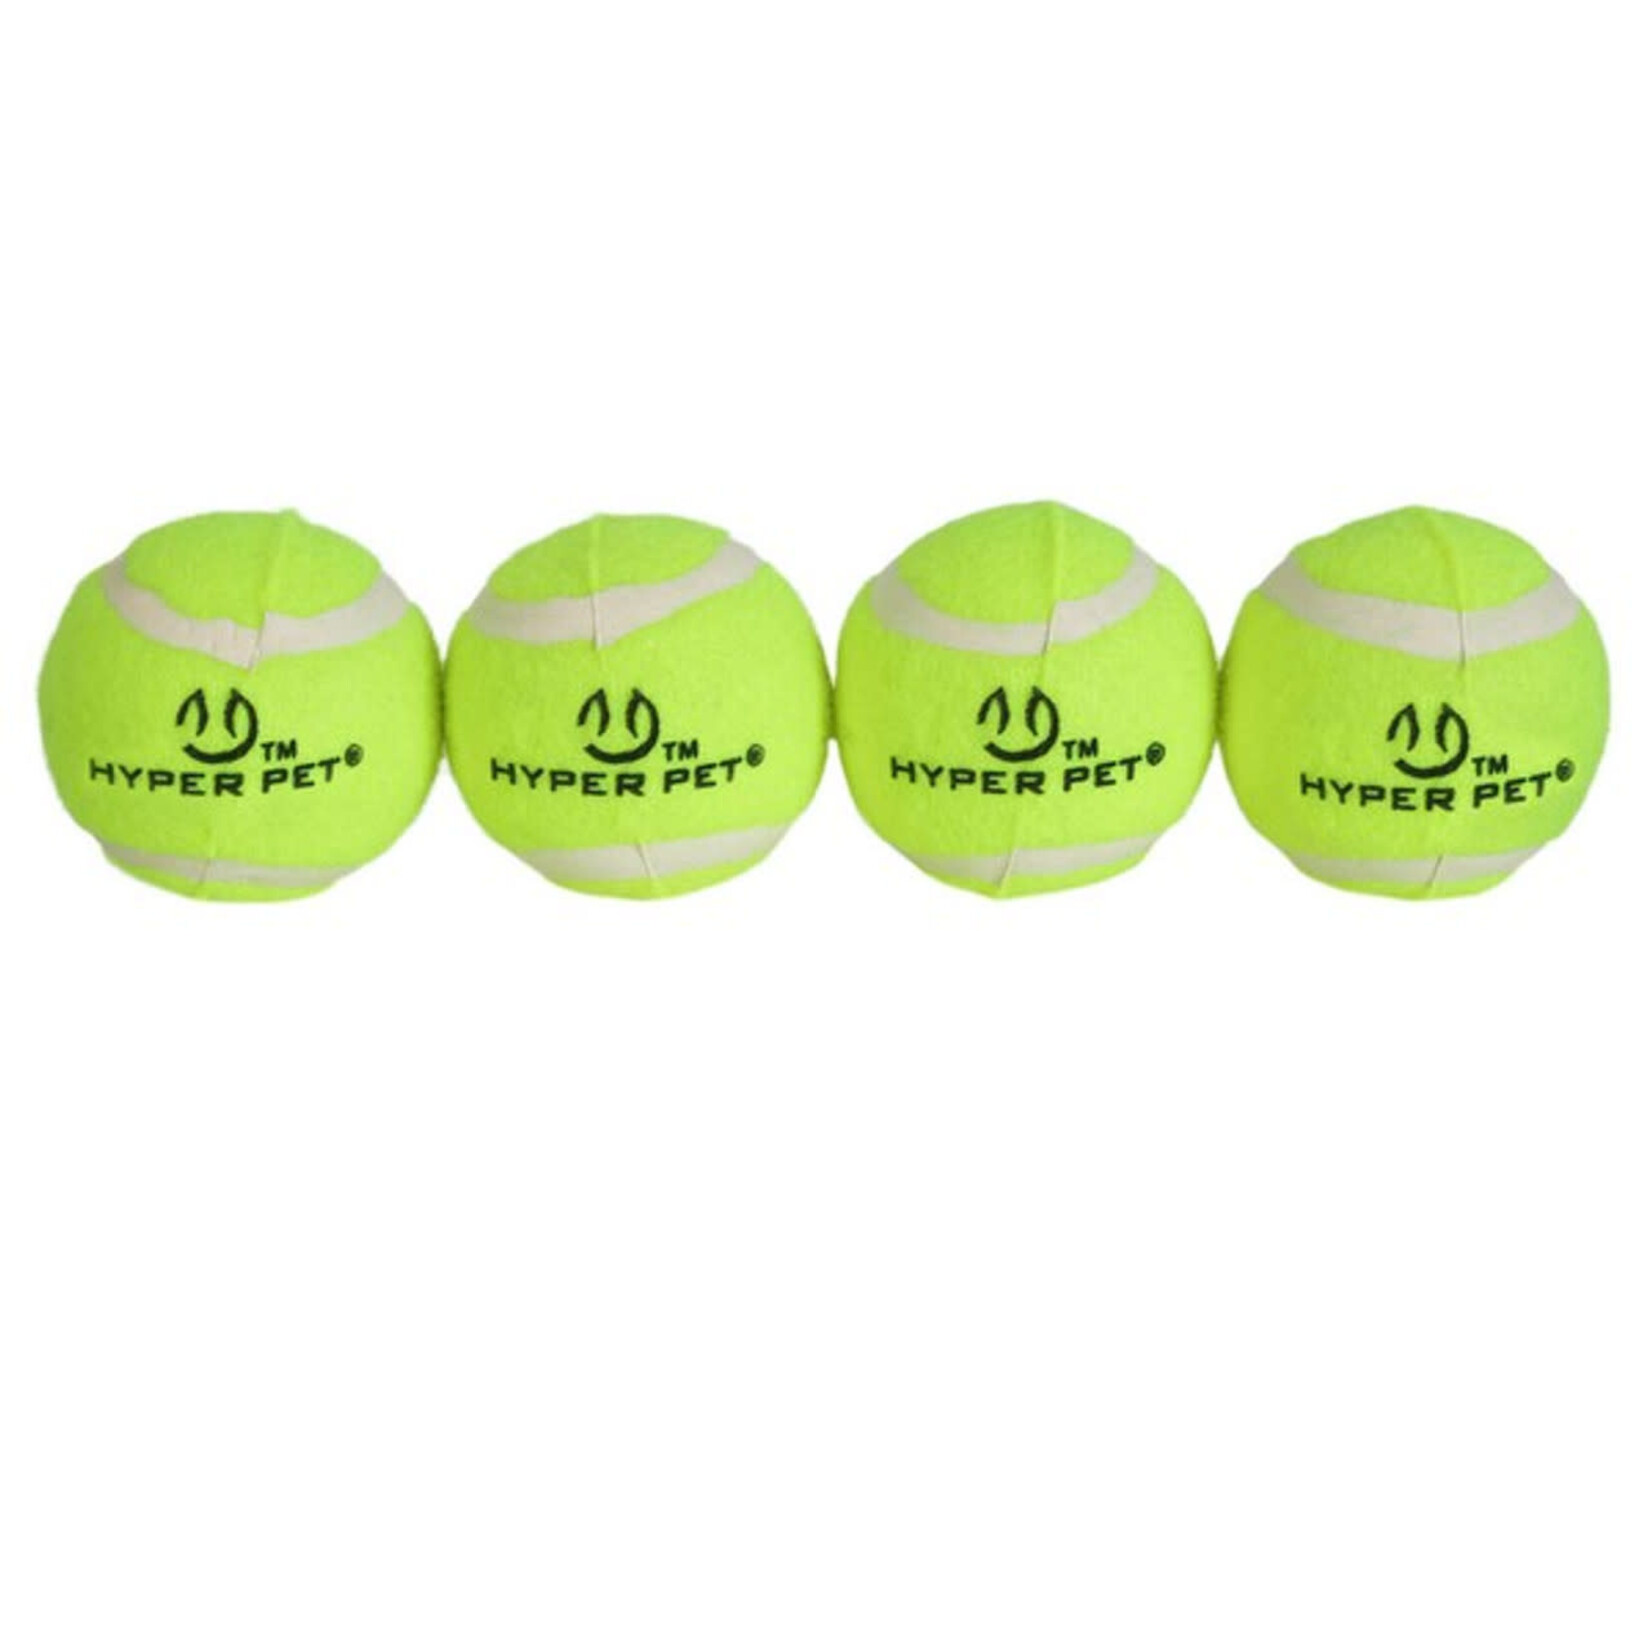 Hyper Pet Tennis Balls Dog Toy in Green, 4 pack